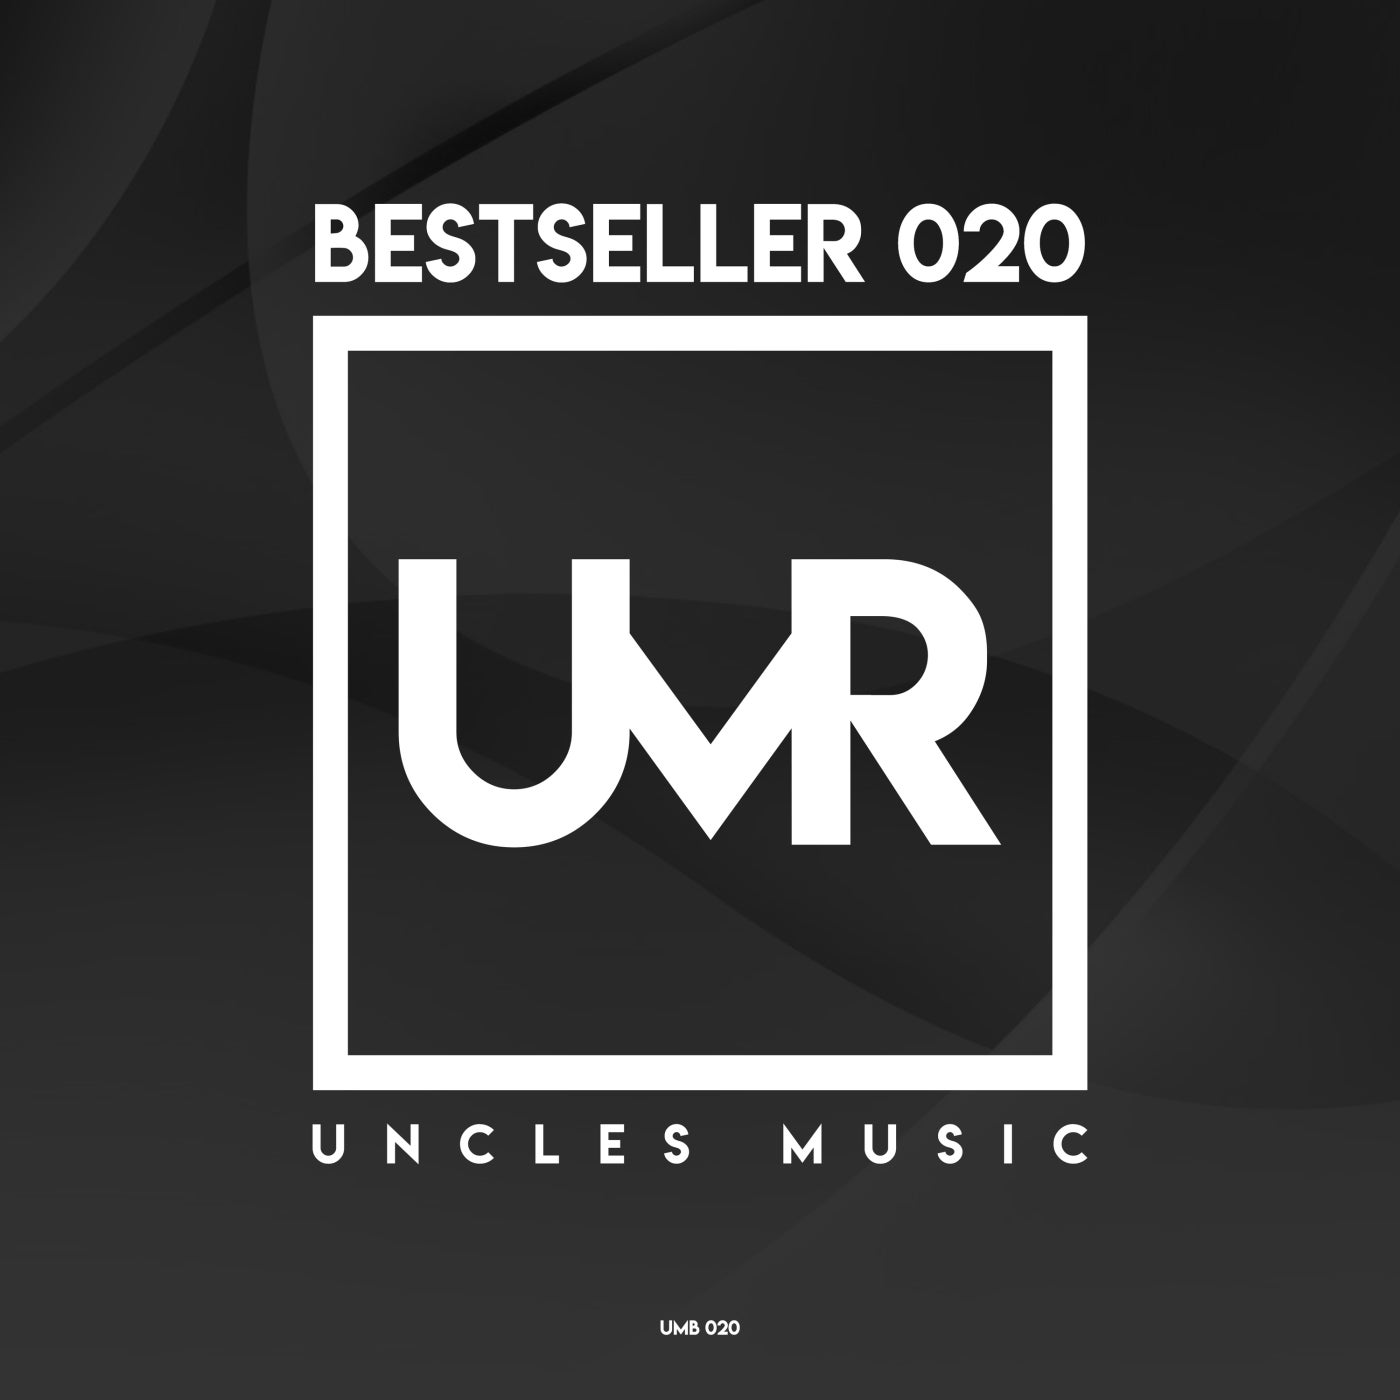 Uncles Music "Bestseller 020"